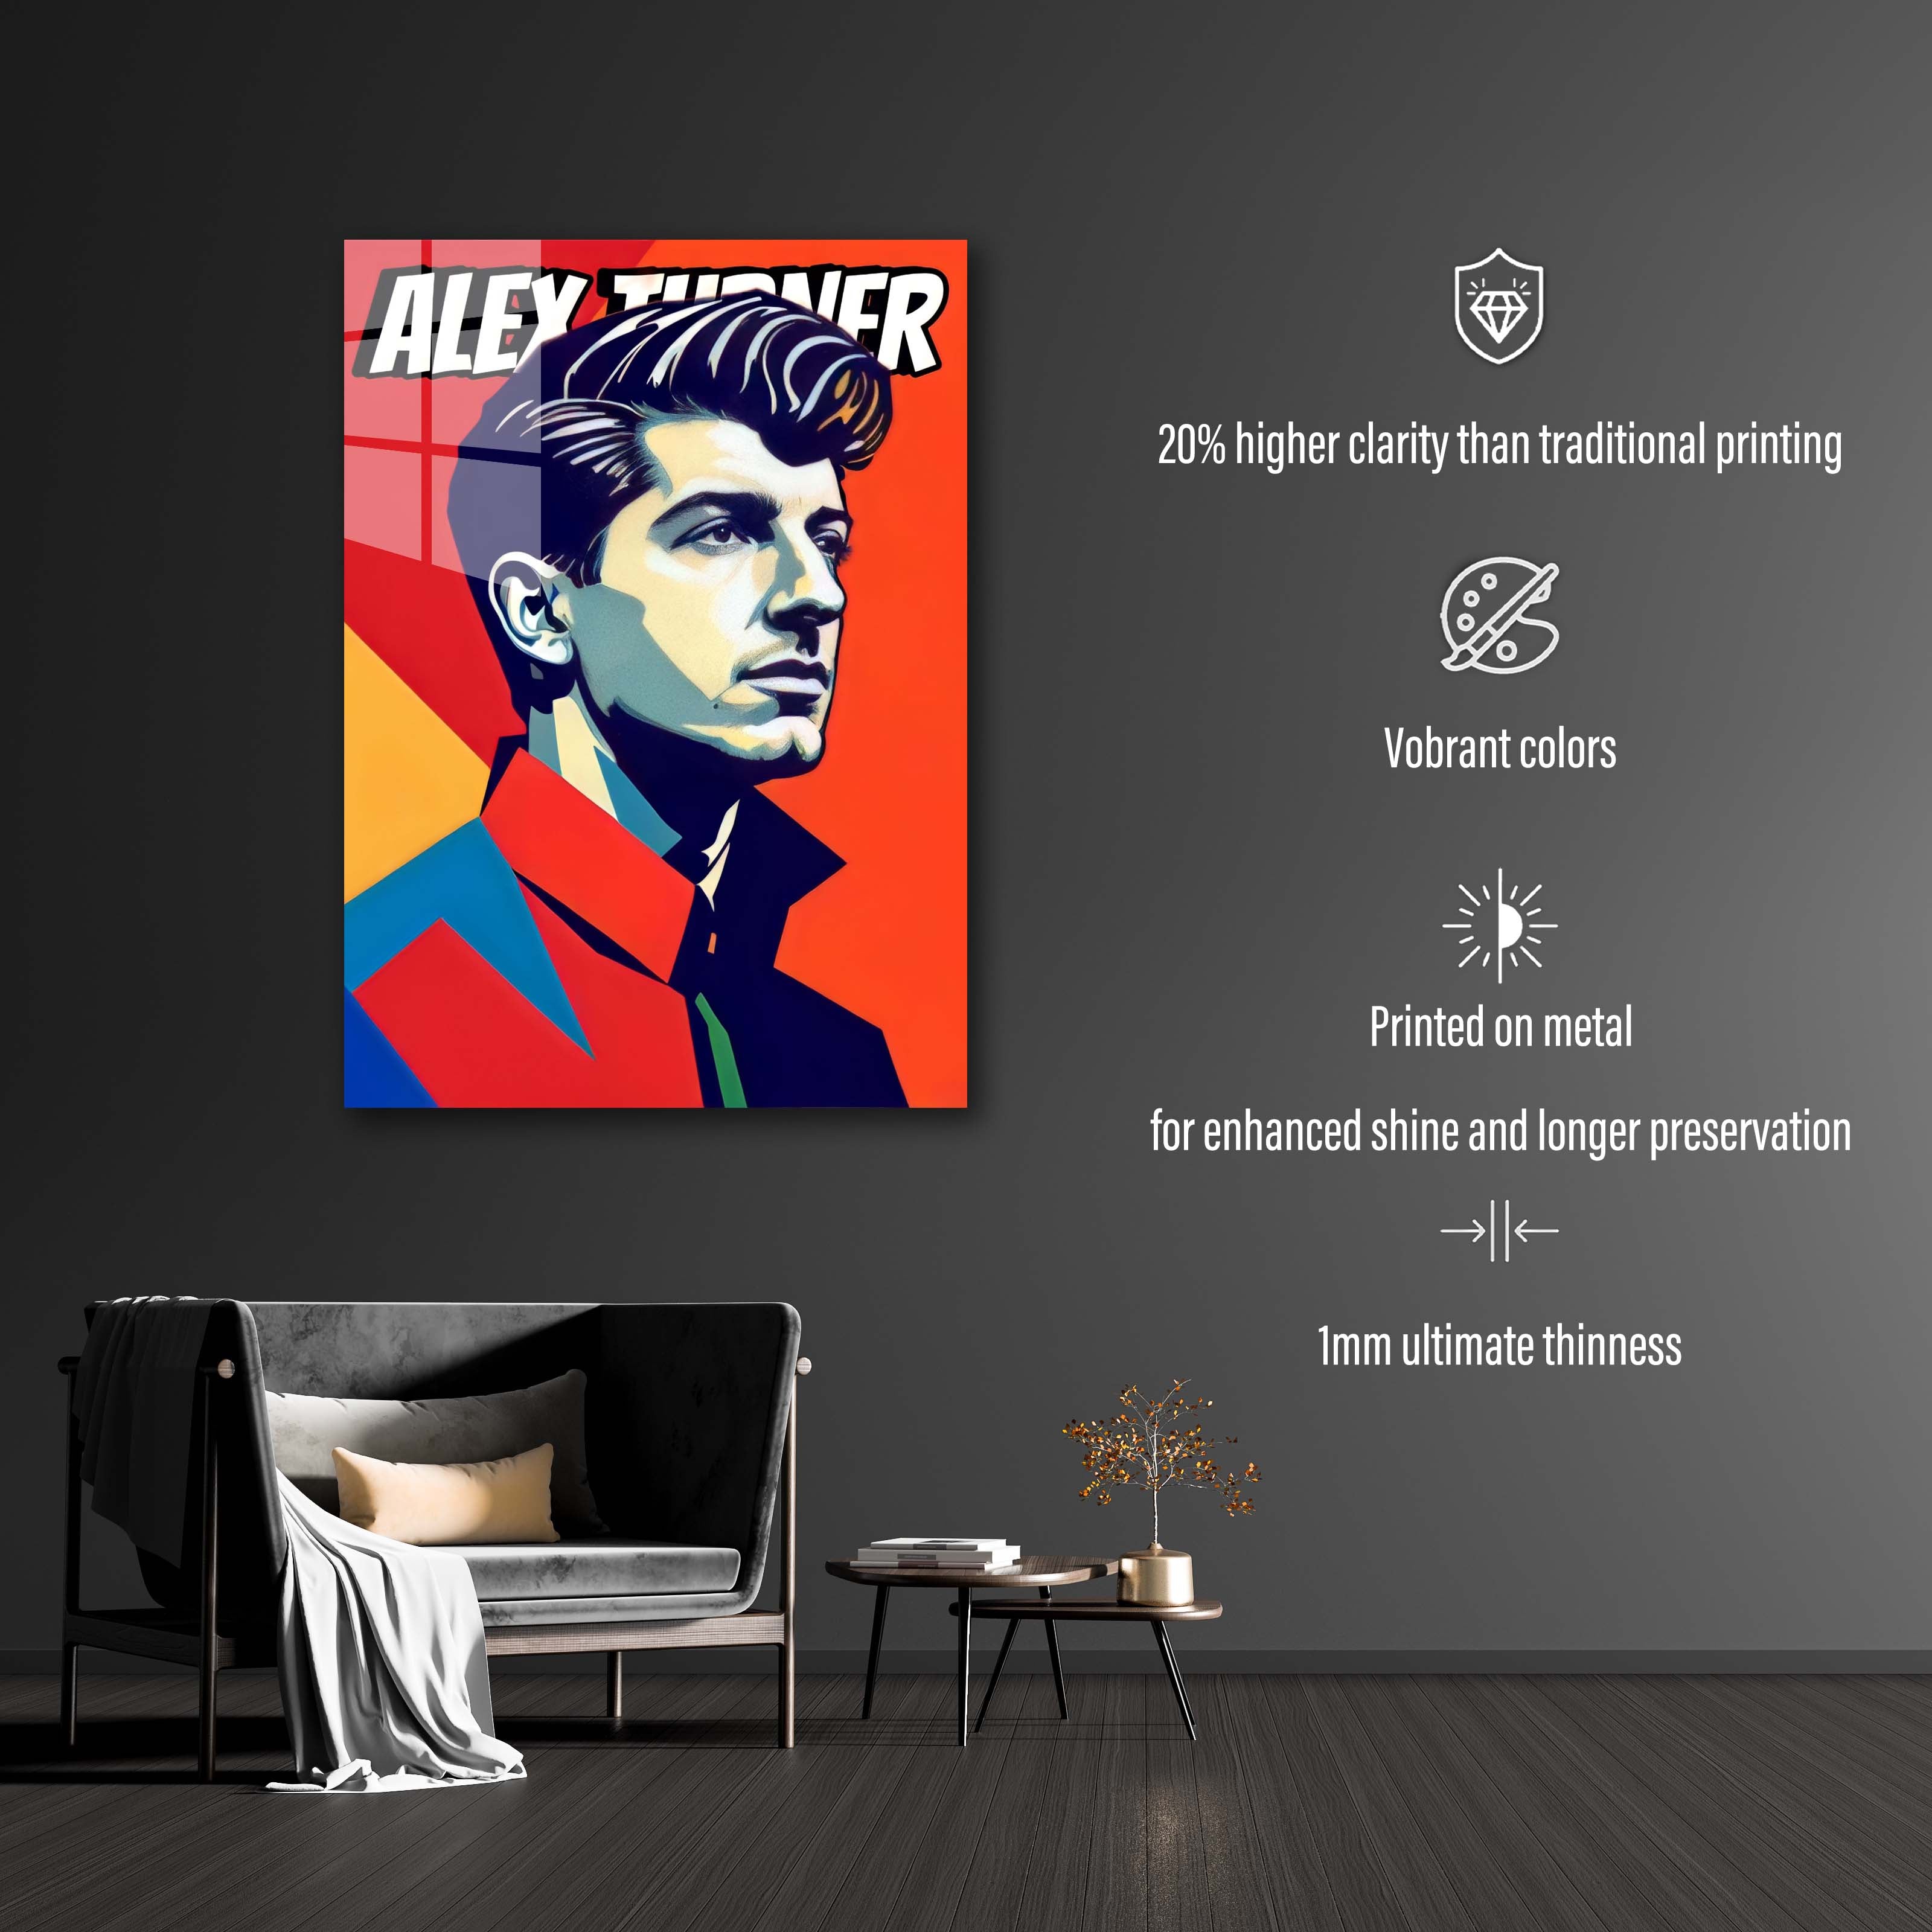 Alex Turner - Pop art-designed by @ALTAY